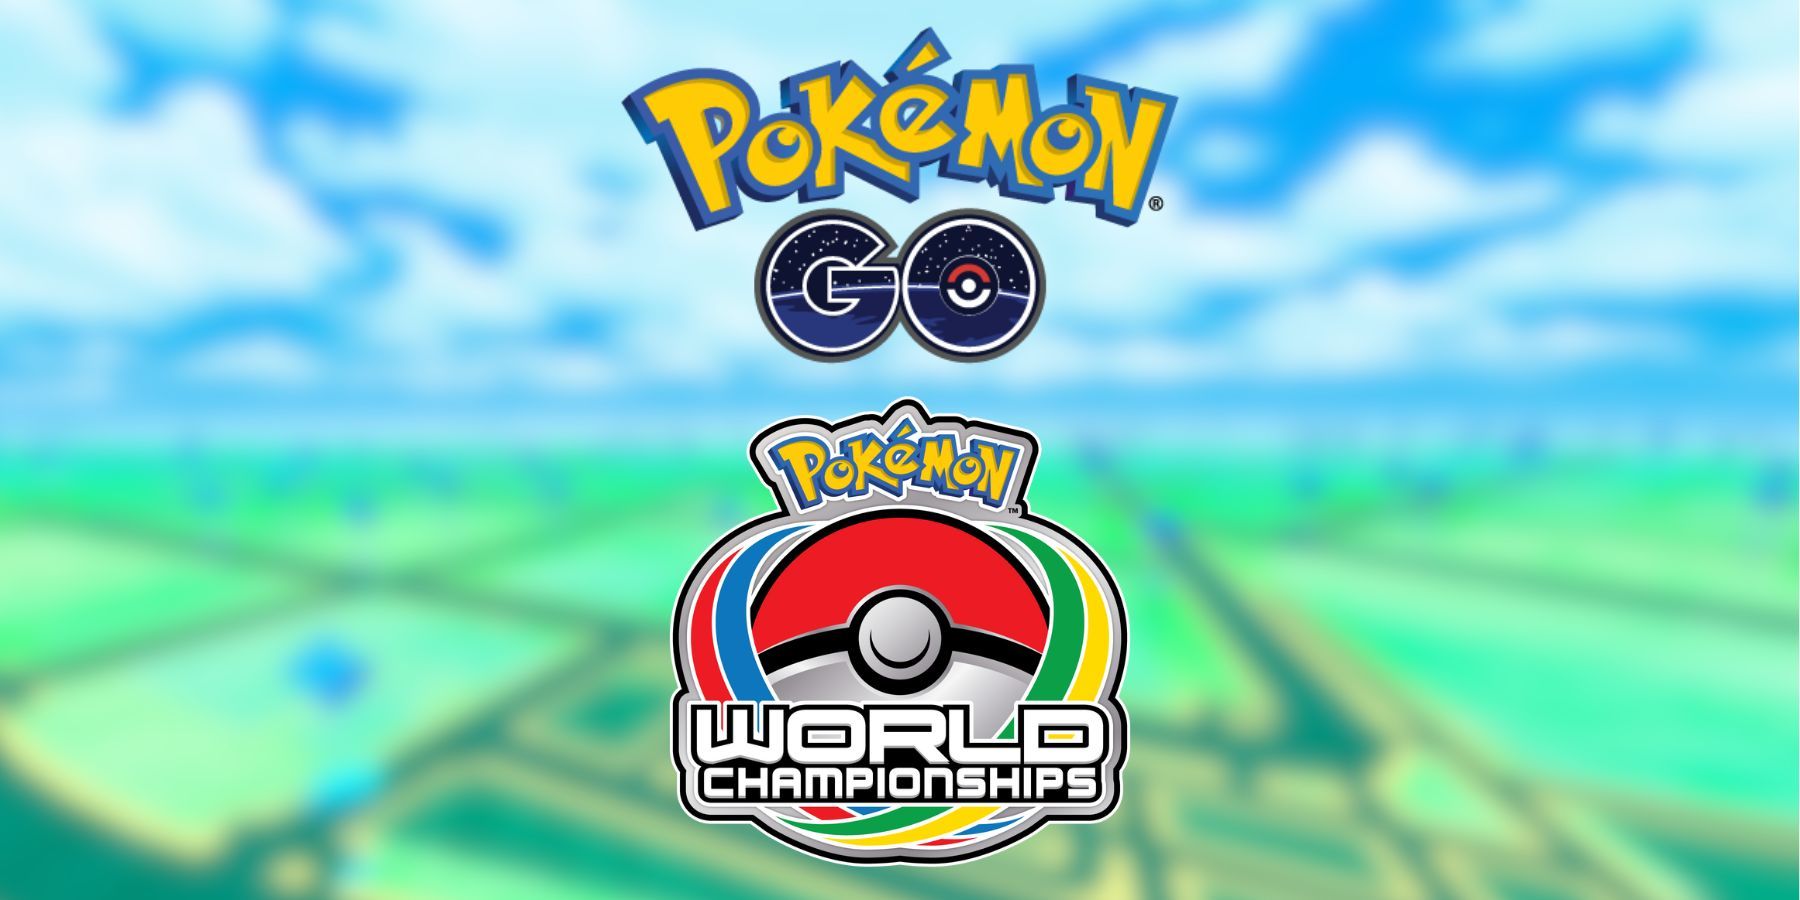  Pokemon GO World Championships official logo